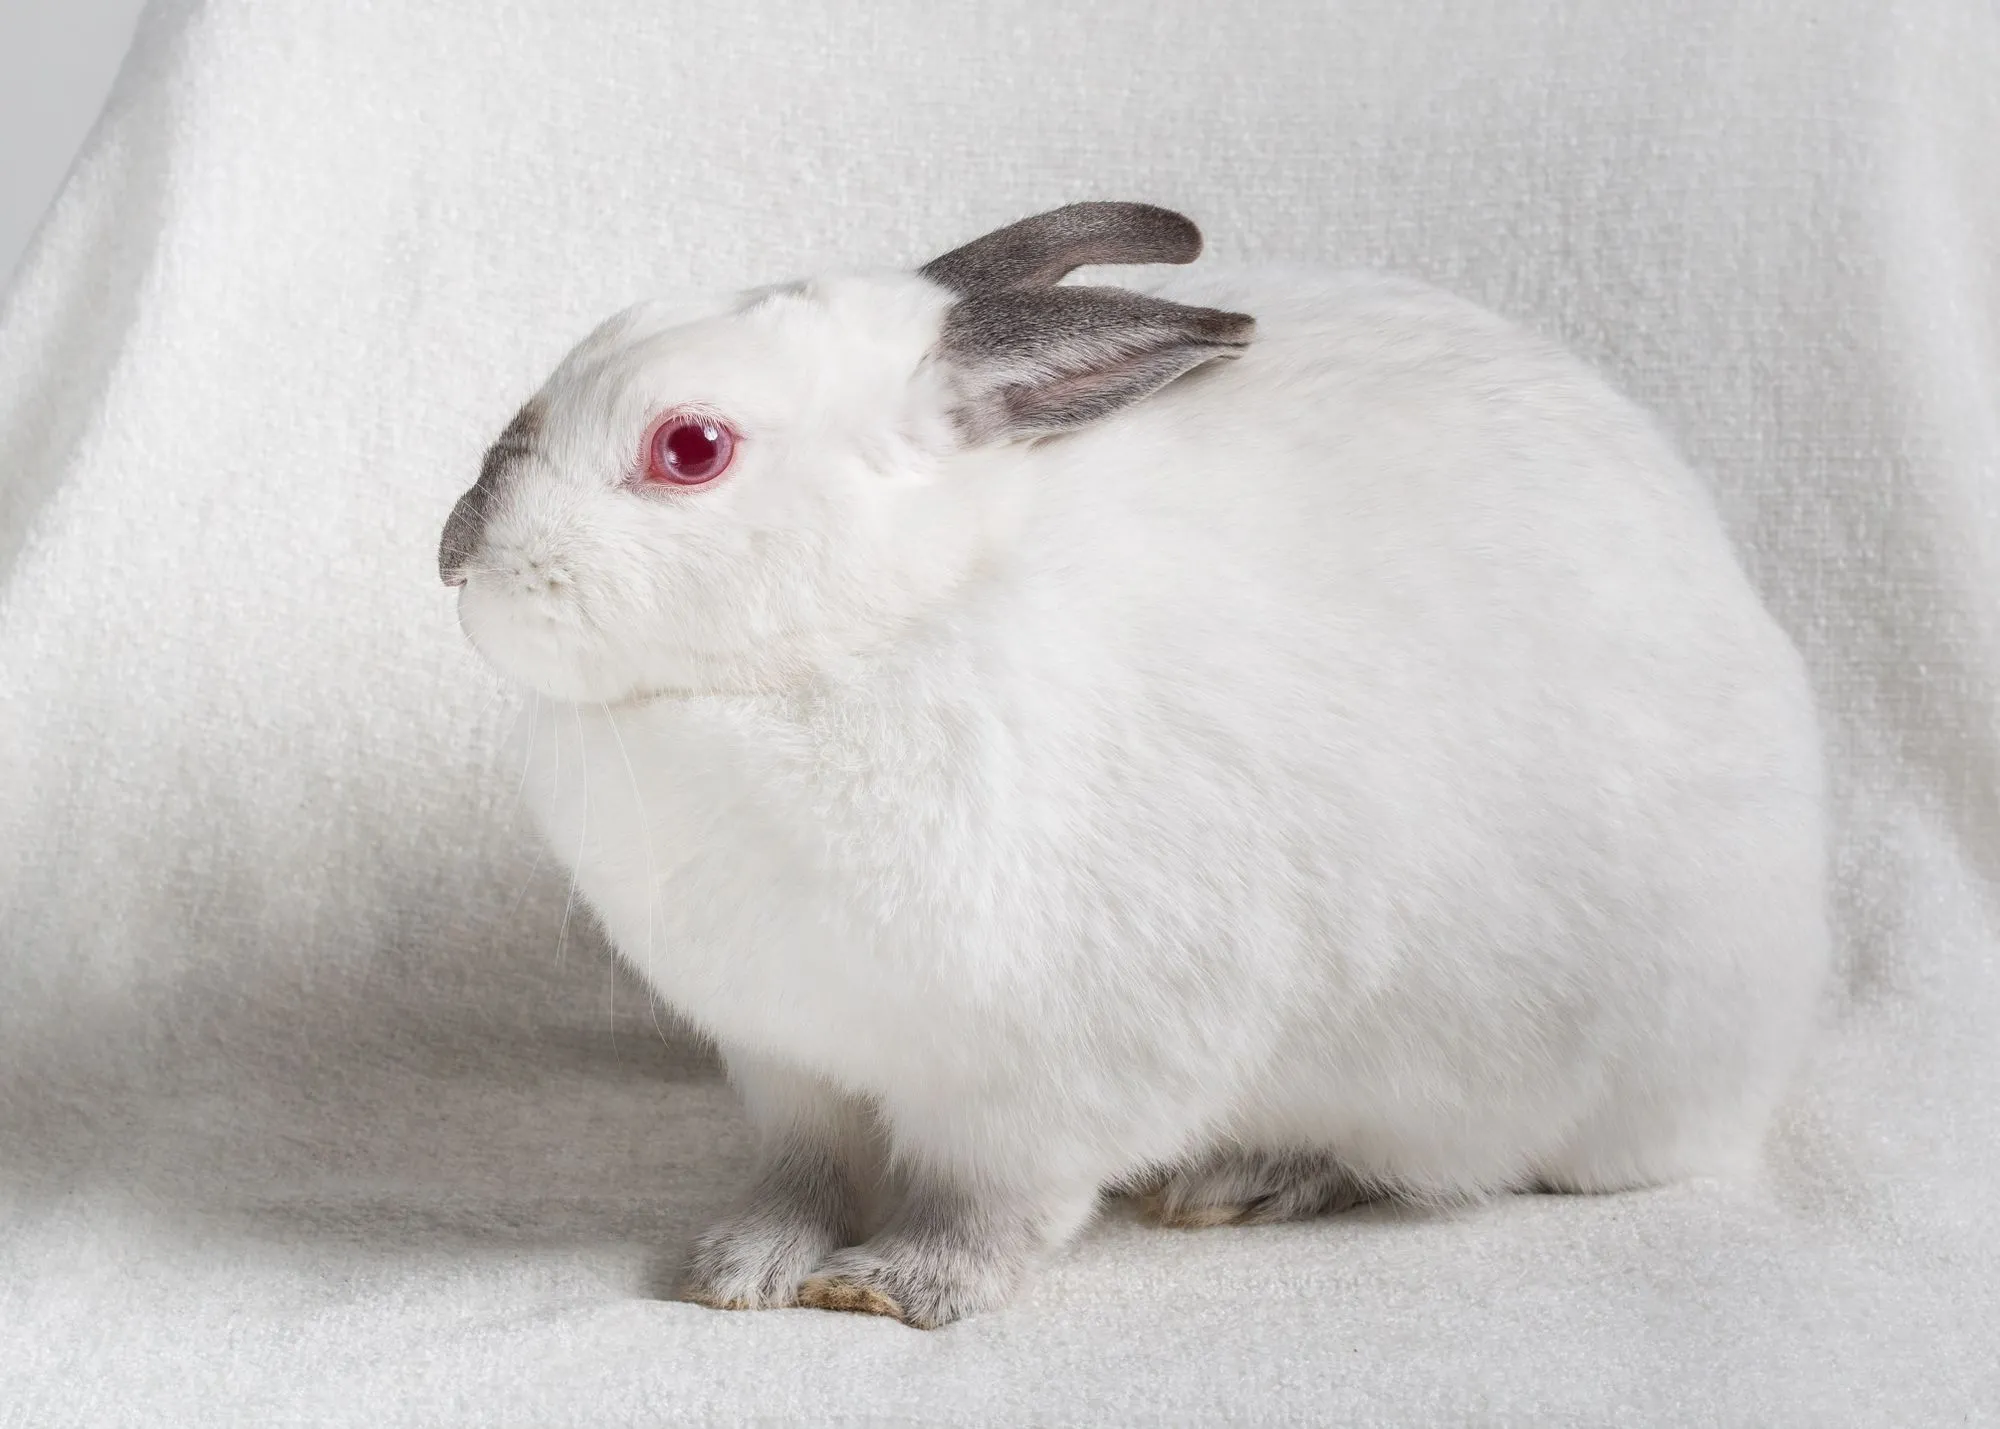 California white rabbit facts on this domestic rabbit.